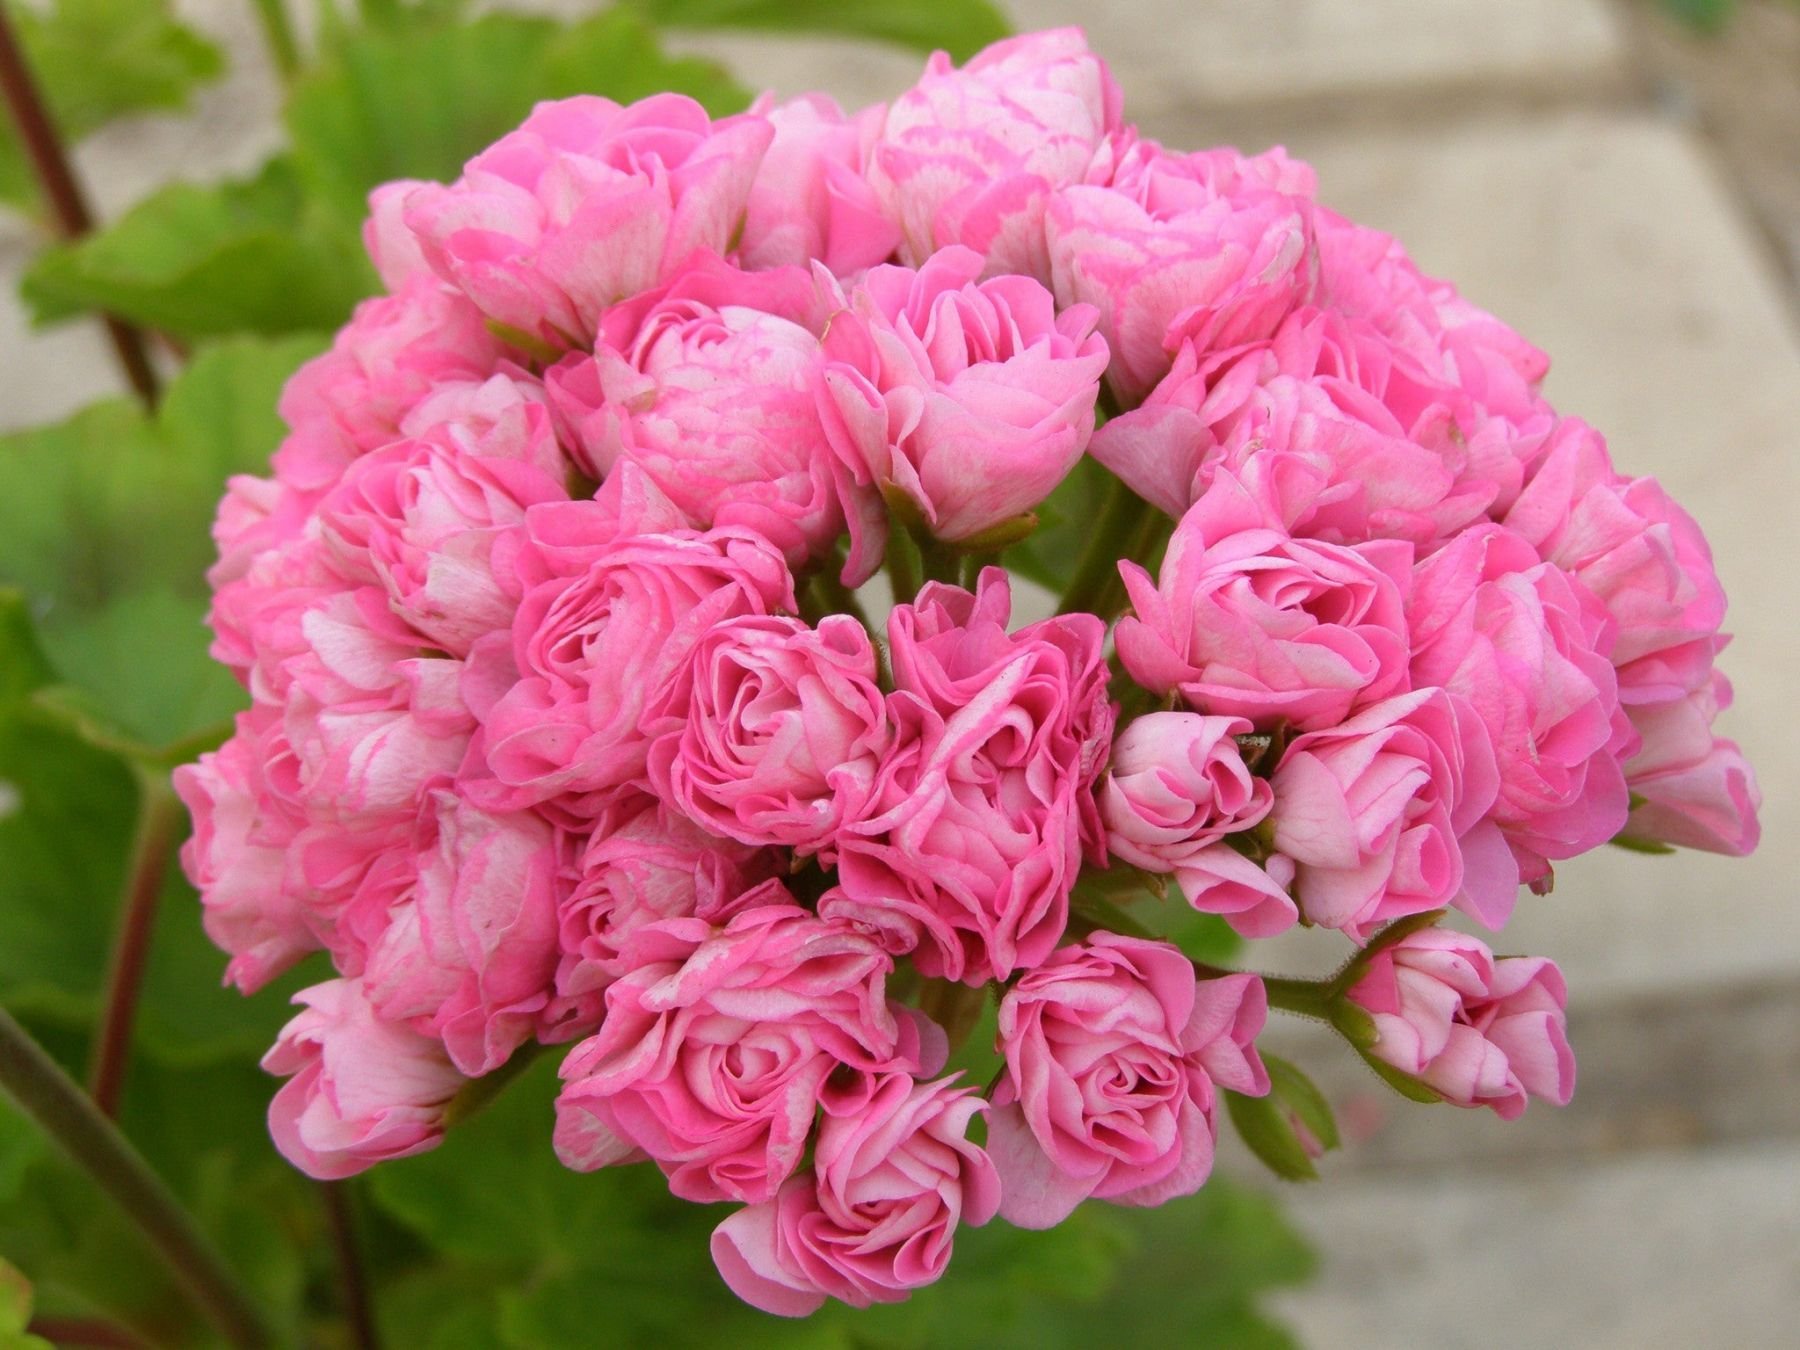 Пеларгония Swanland Pink. Australian Pink Rosebud пеларгония. Пеларгония Swanland Pink Australien Pink Rosebud. Герань пинк